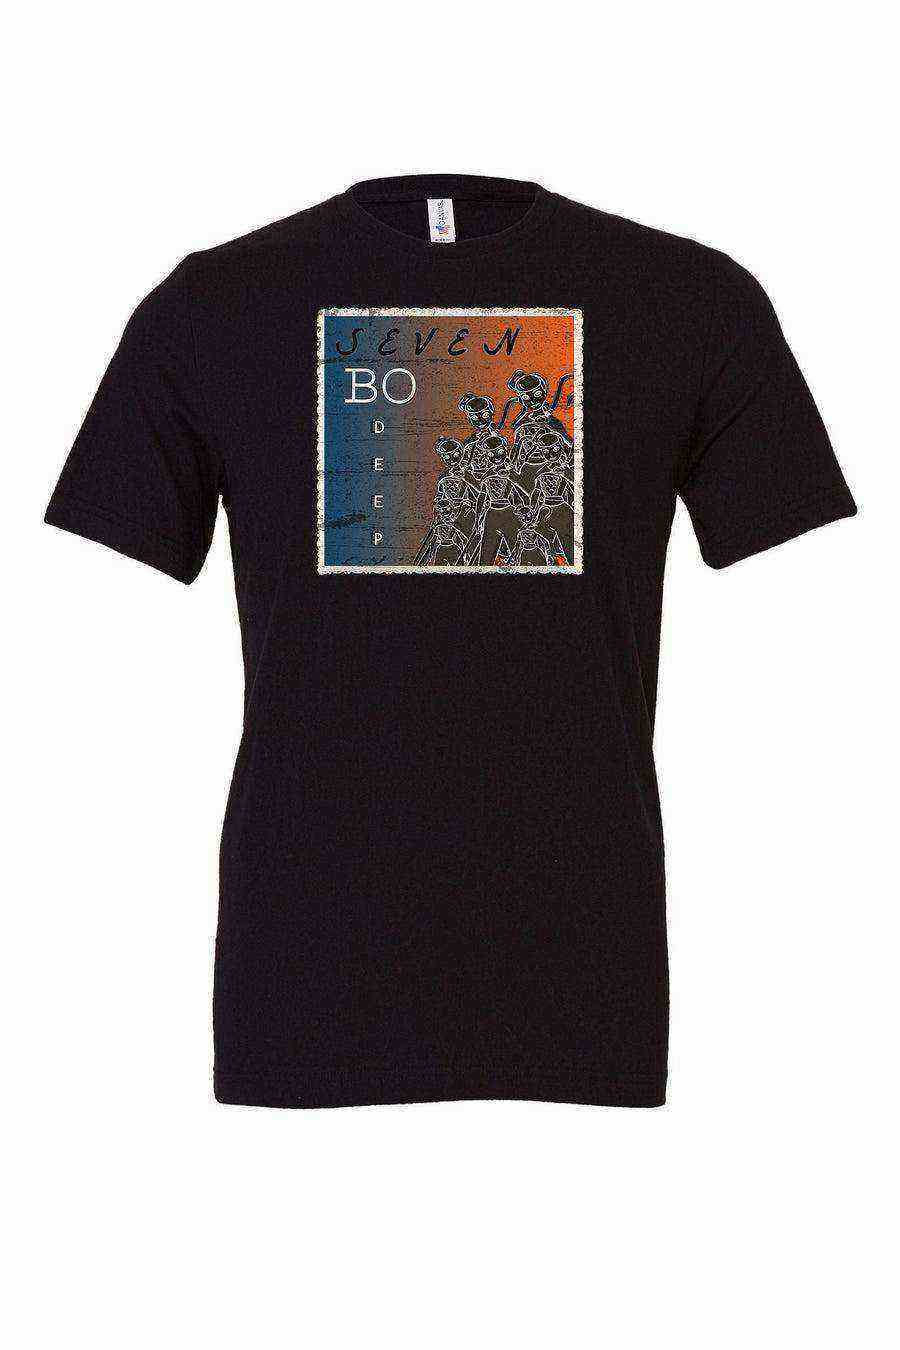 Seven Bo Deep Concert Tee | Bo Peep Grunge Album Shirt - Dylan's Tees